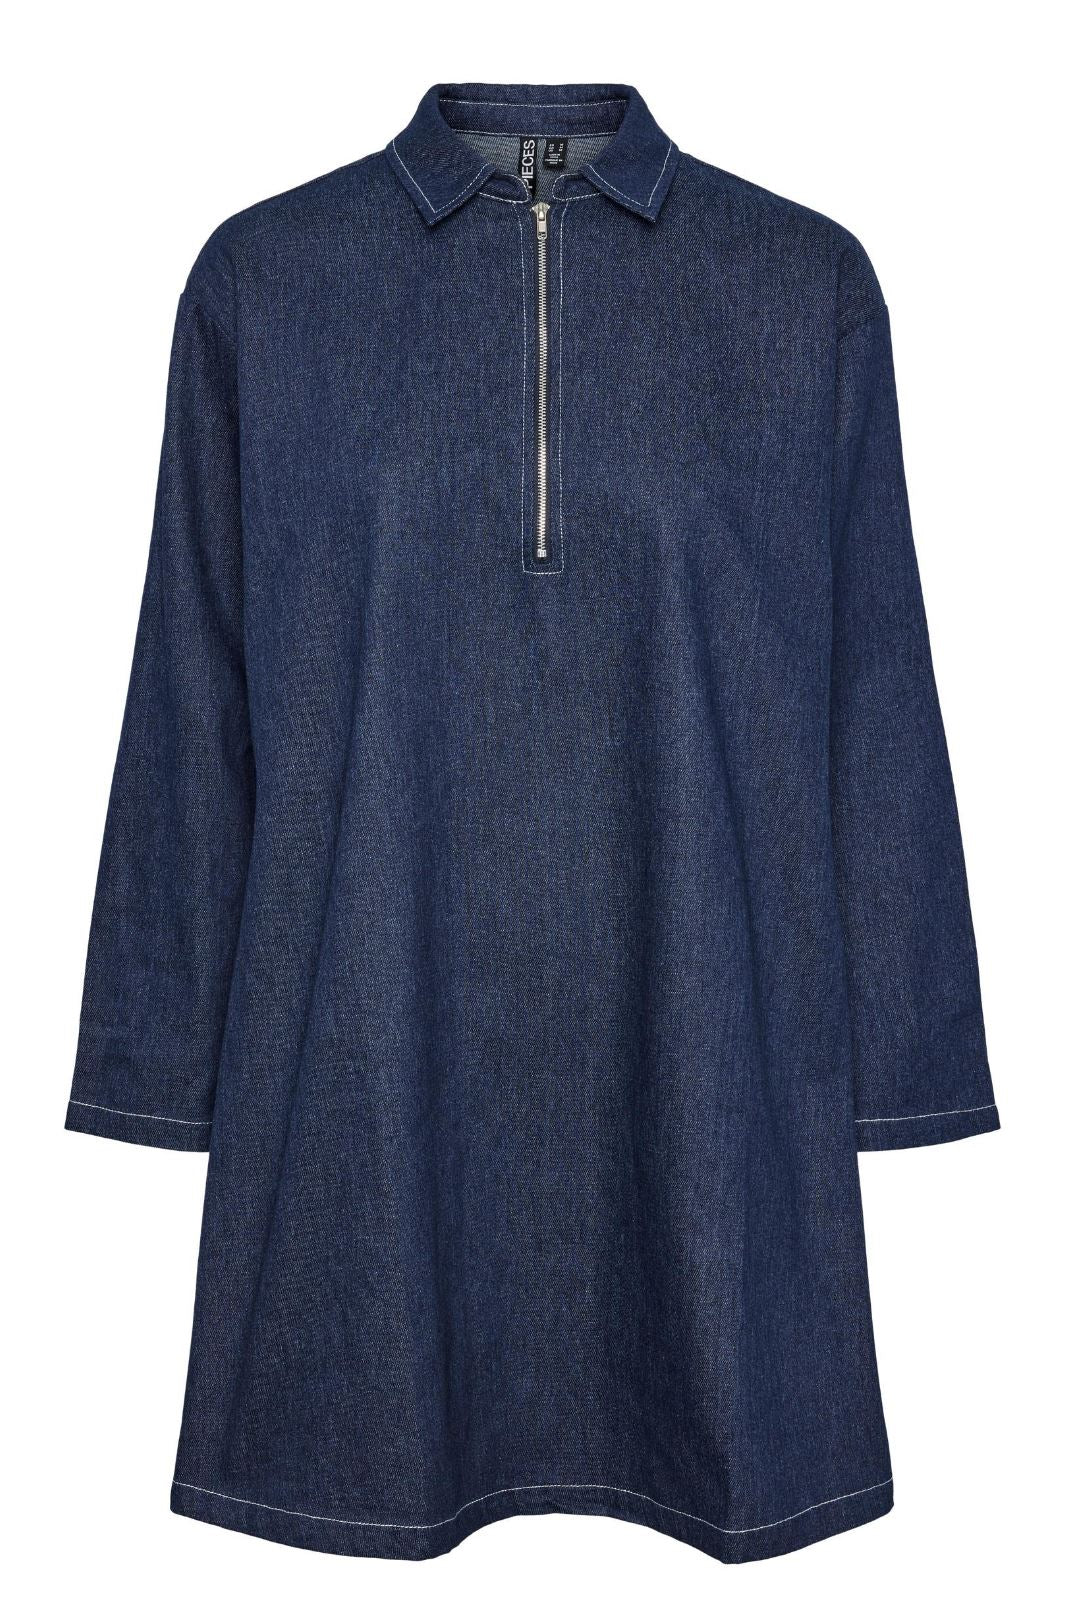 Pieces - Pcshirley Ls Short Denim Dress - 4523434 Dark Blue Denim White Contrast Stiching Kjoler 